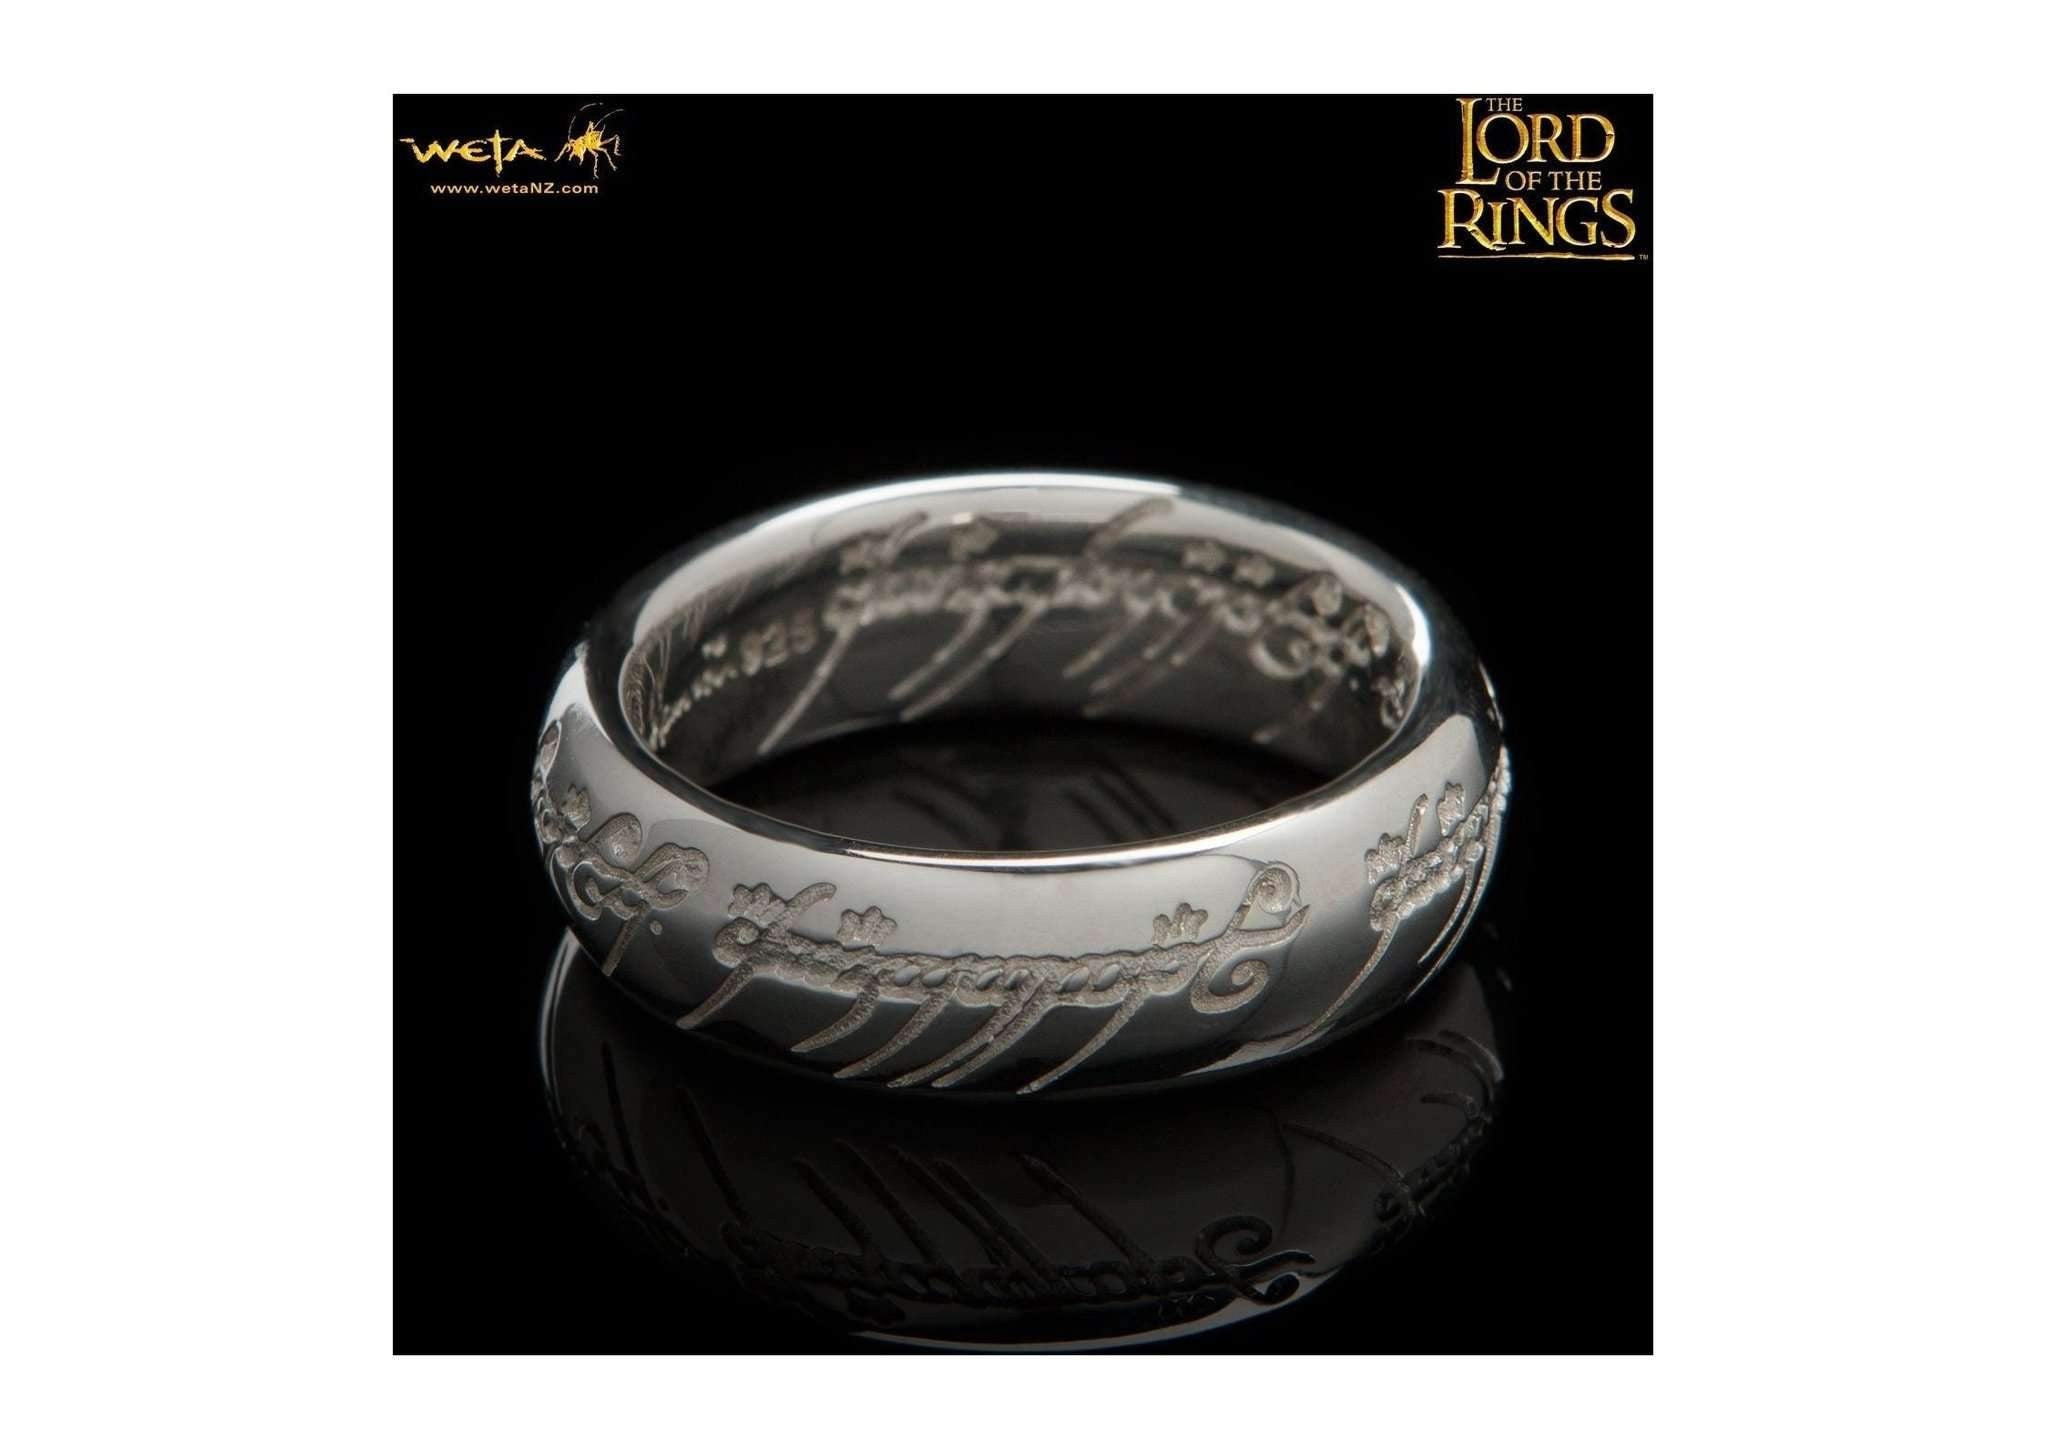 Oxidized Filigree Design Band Silver Ring Female Jewelry - Gem O Sparkle